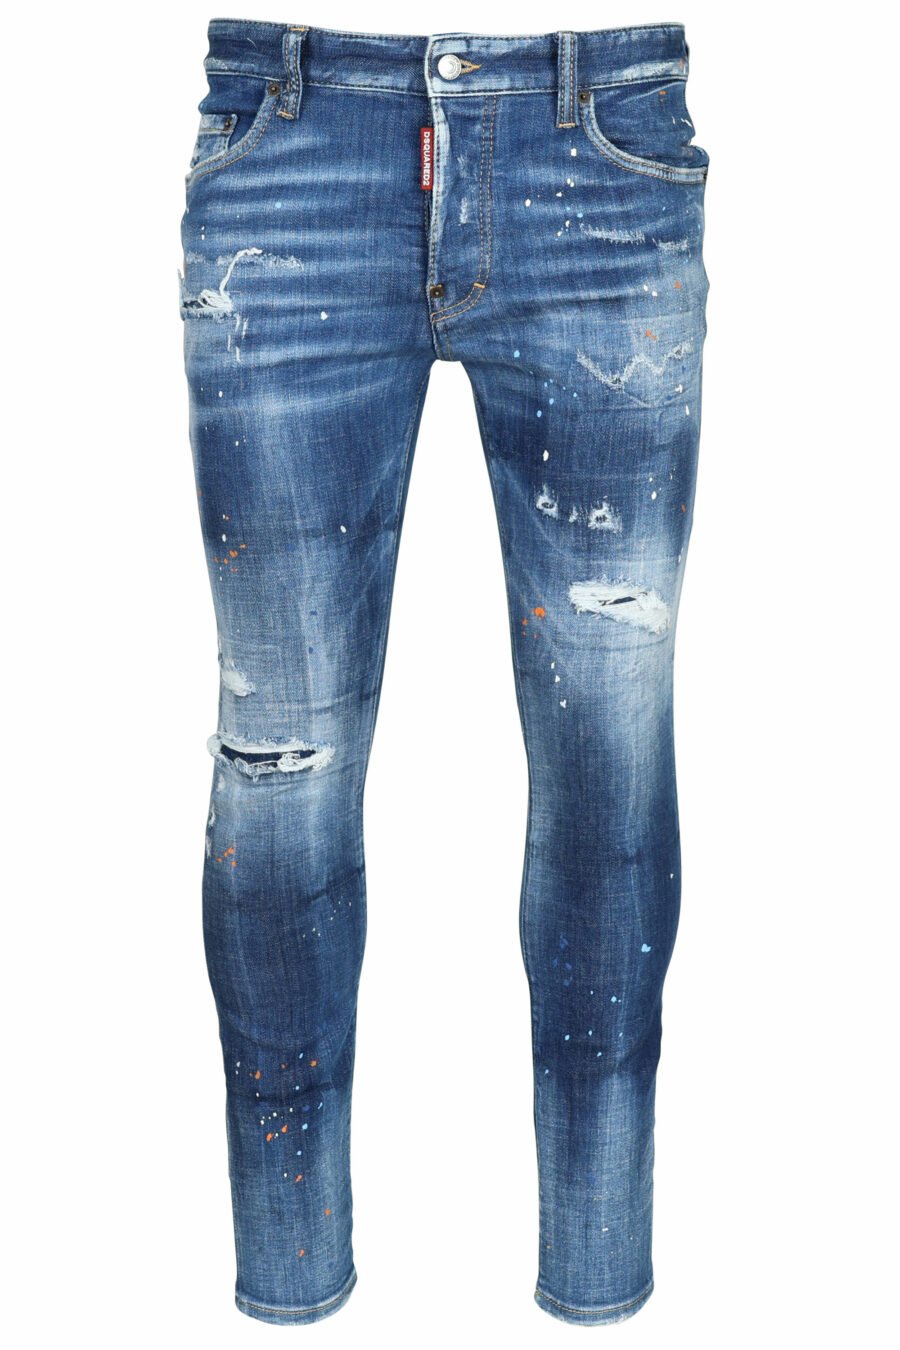 Pantalón vaquero azul "super twinky" desgastado con rotos - 8054148473228